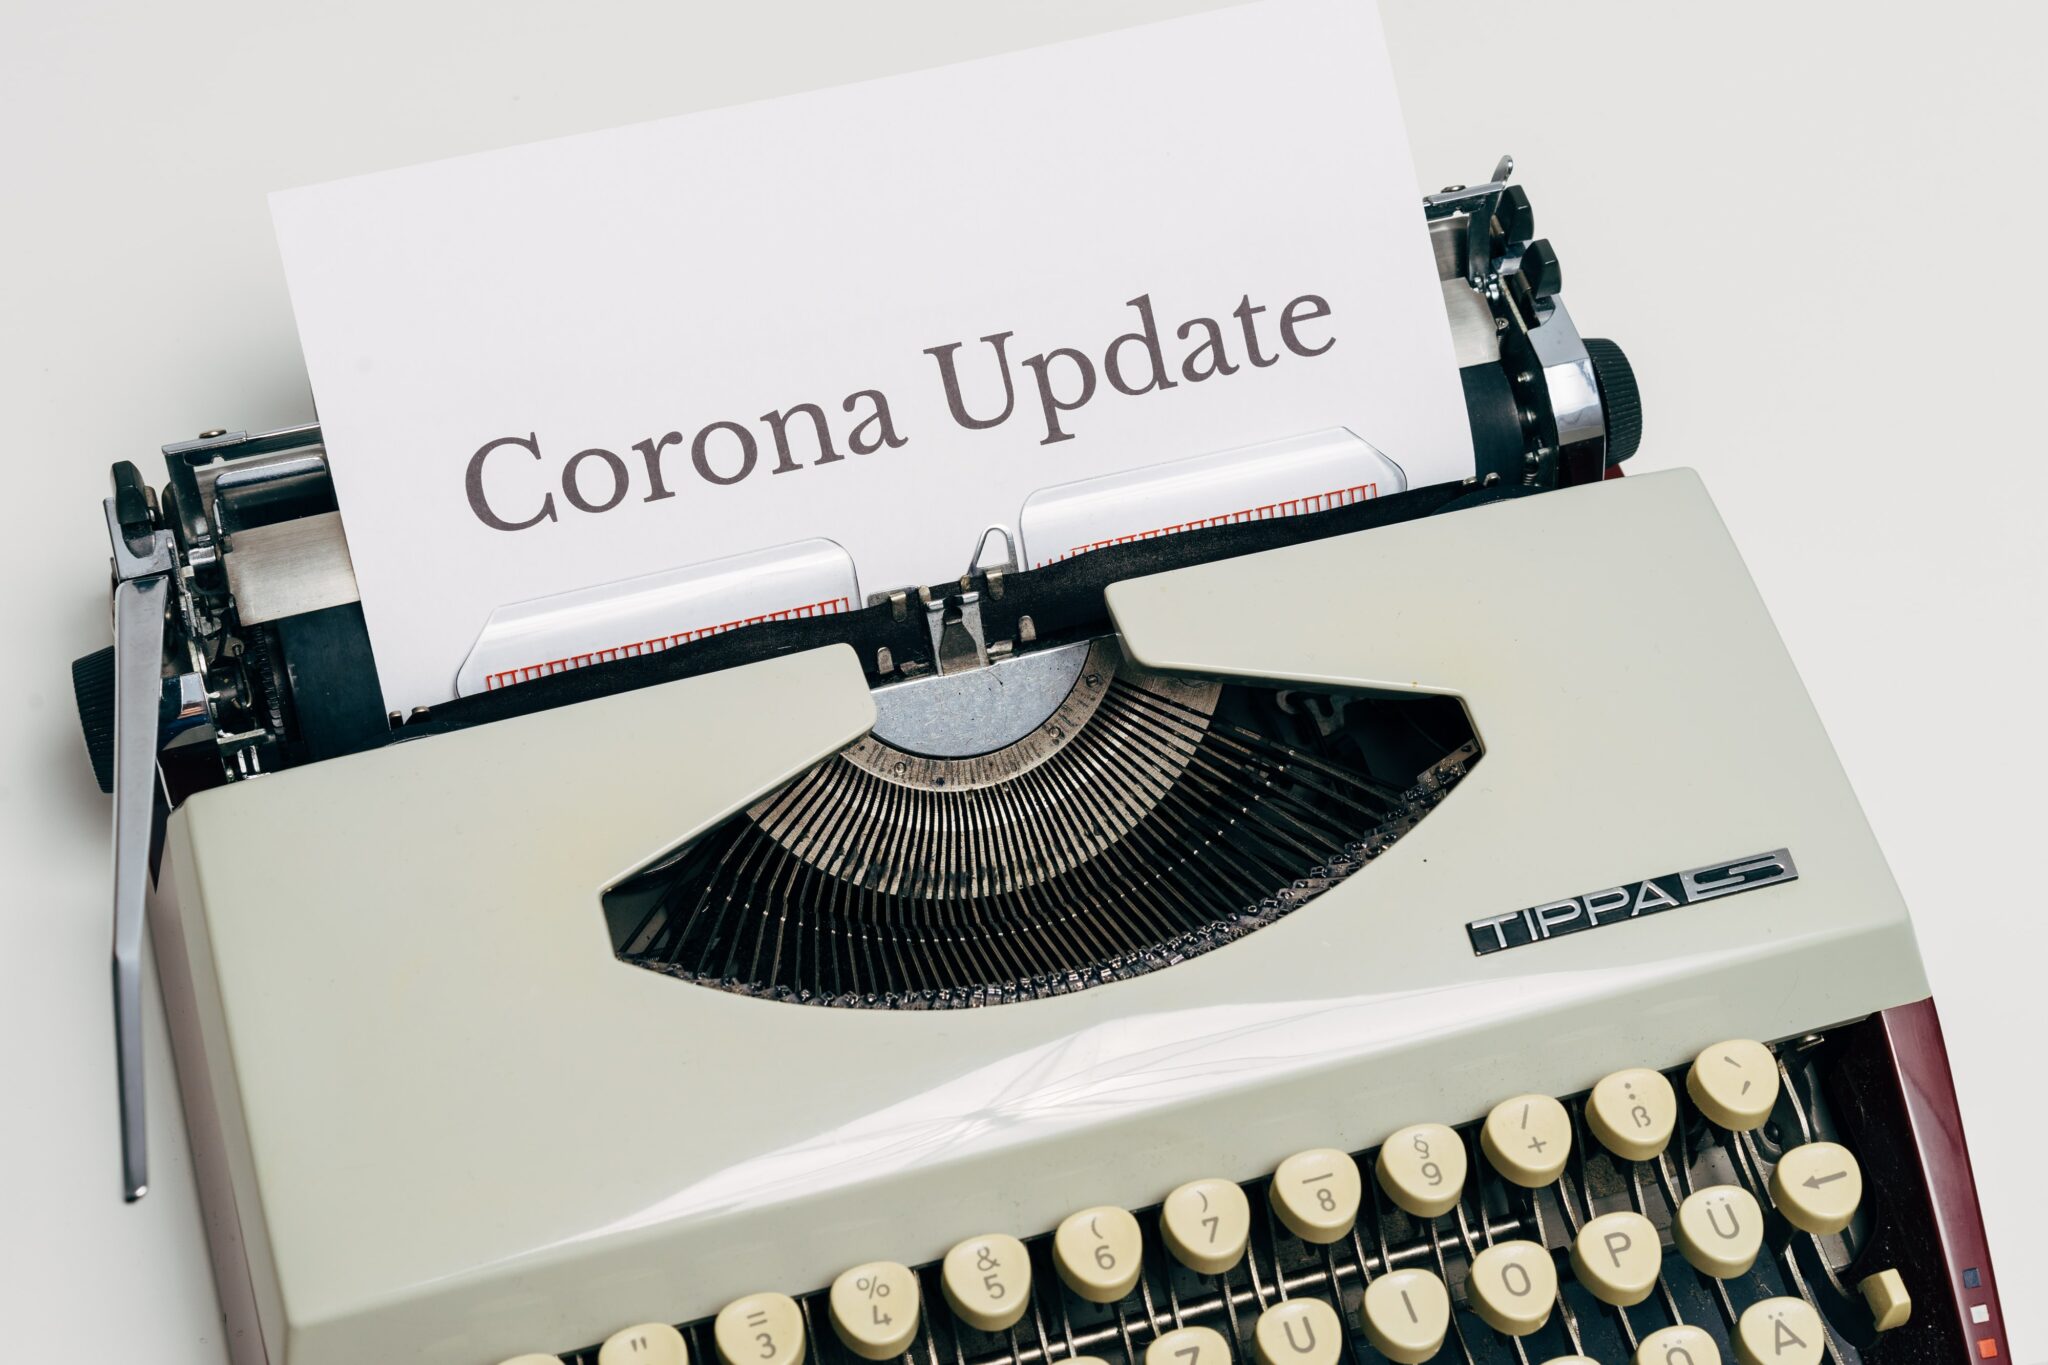 news media about covid-19 an corona